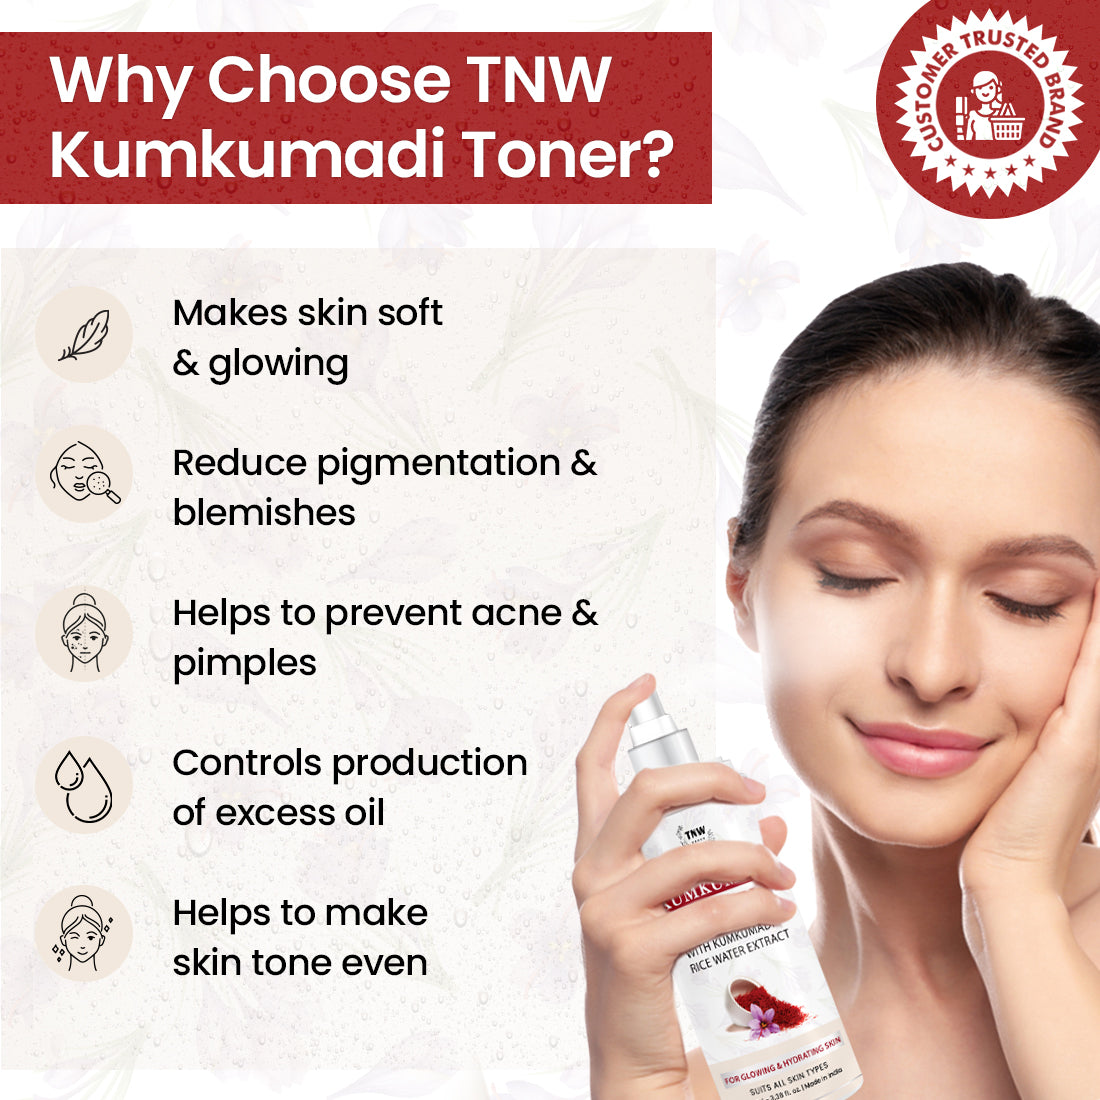 Kumkumadi Toner for Glowing Skin